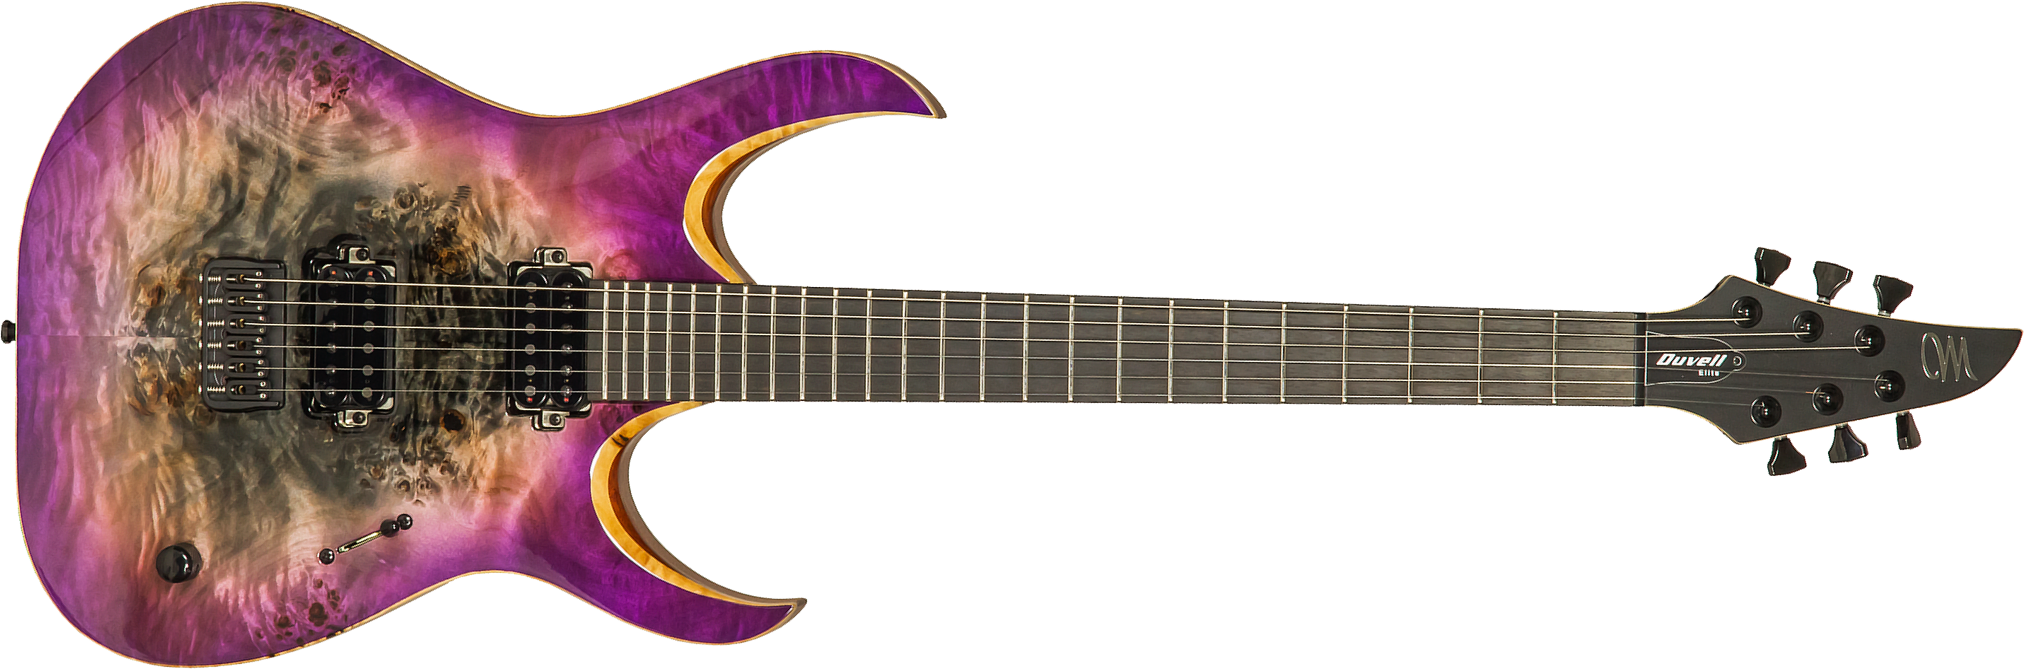 Mayones Guitars Duvell Elite 6 Hh Seymour Duncan Ht Eb #df2105470 - Supernova Purple - Metal electric guitar - Main picture